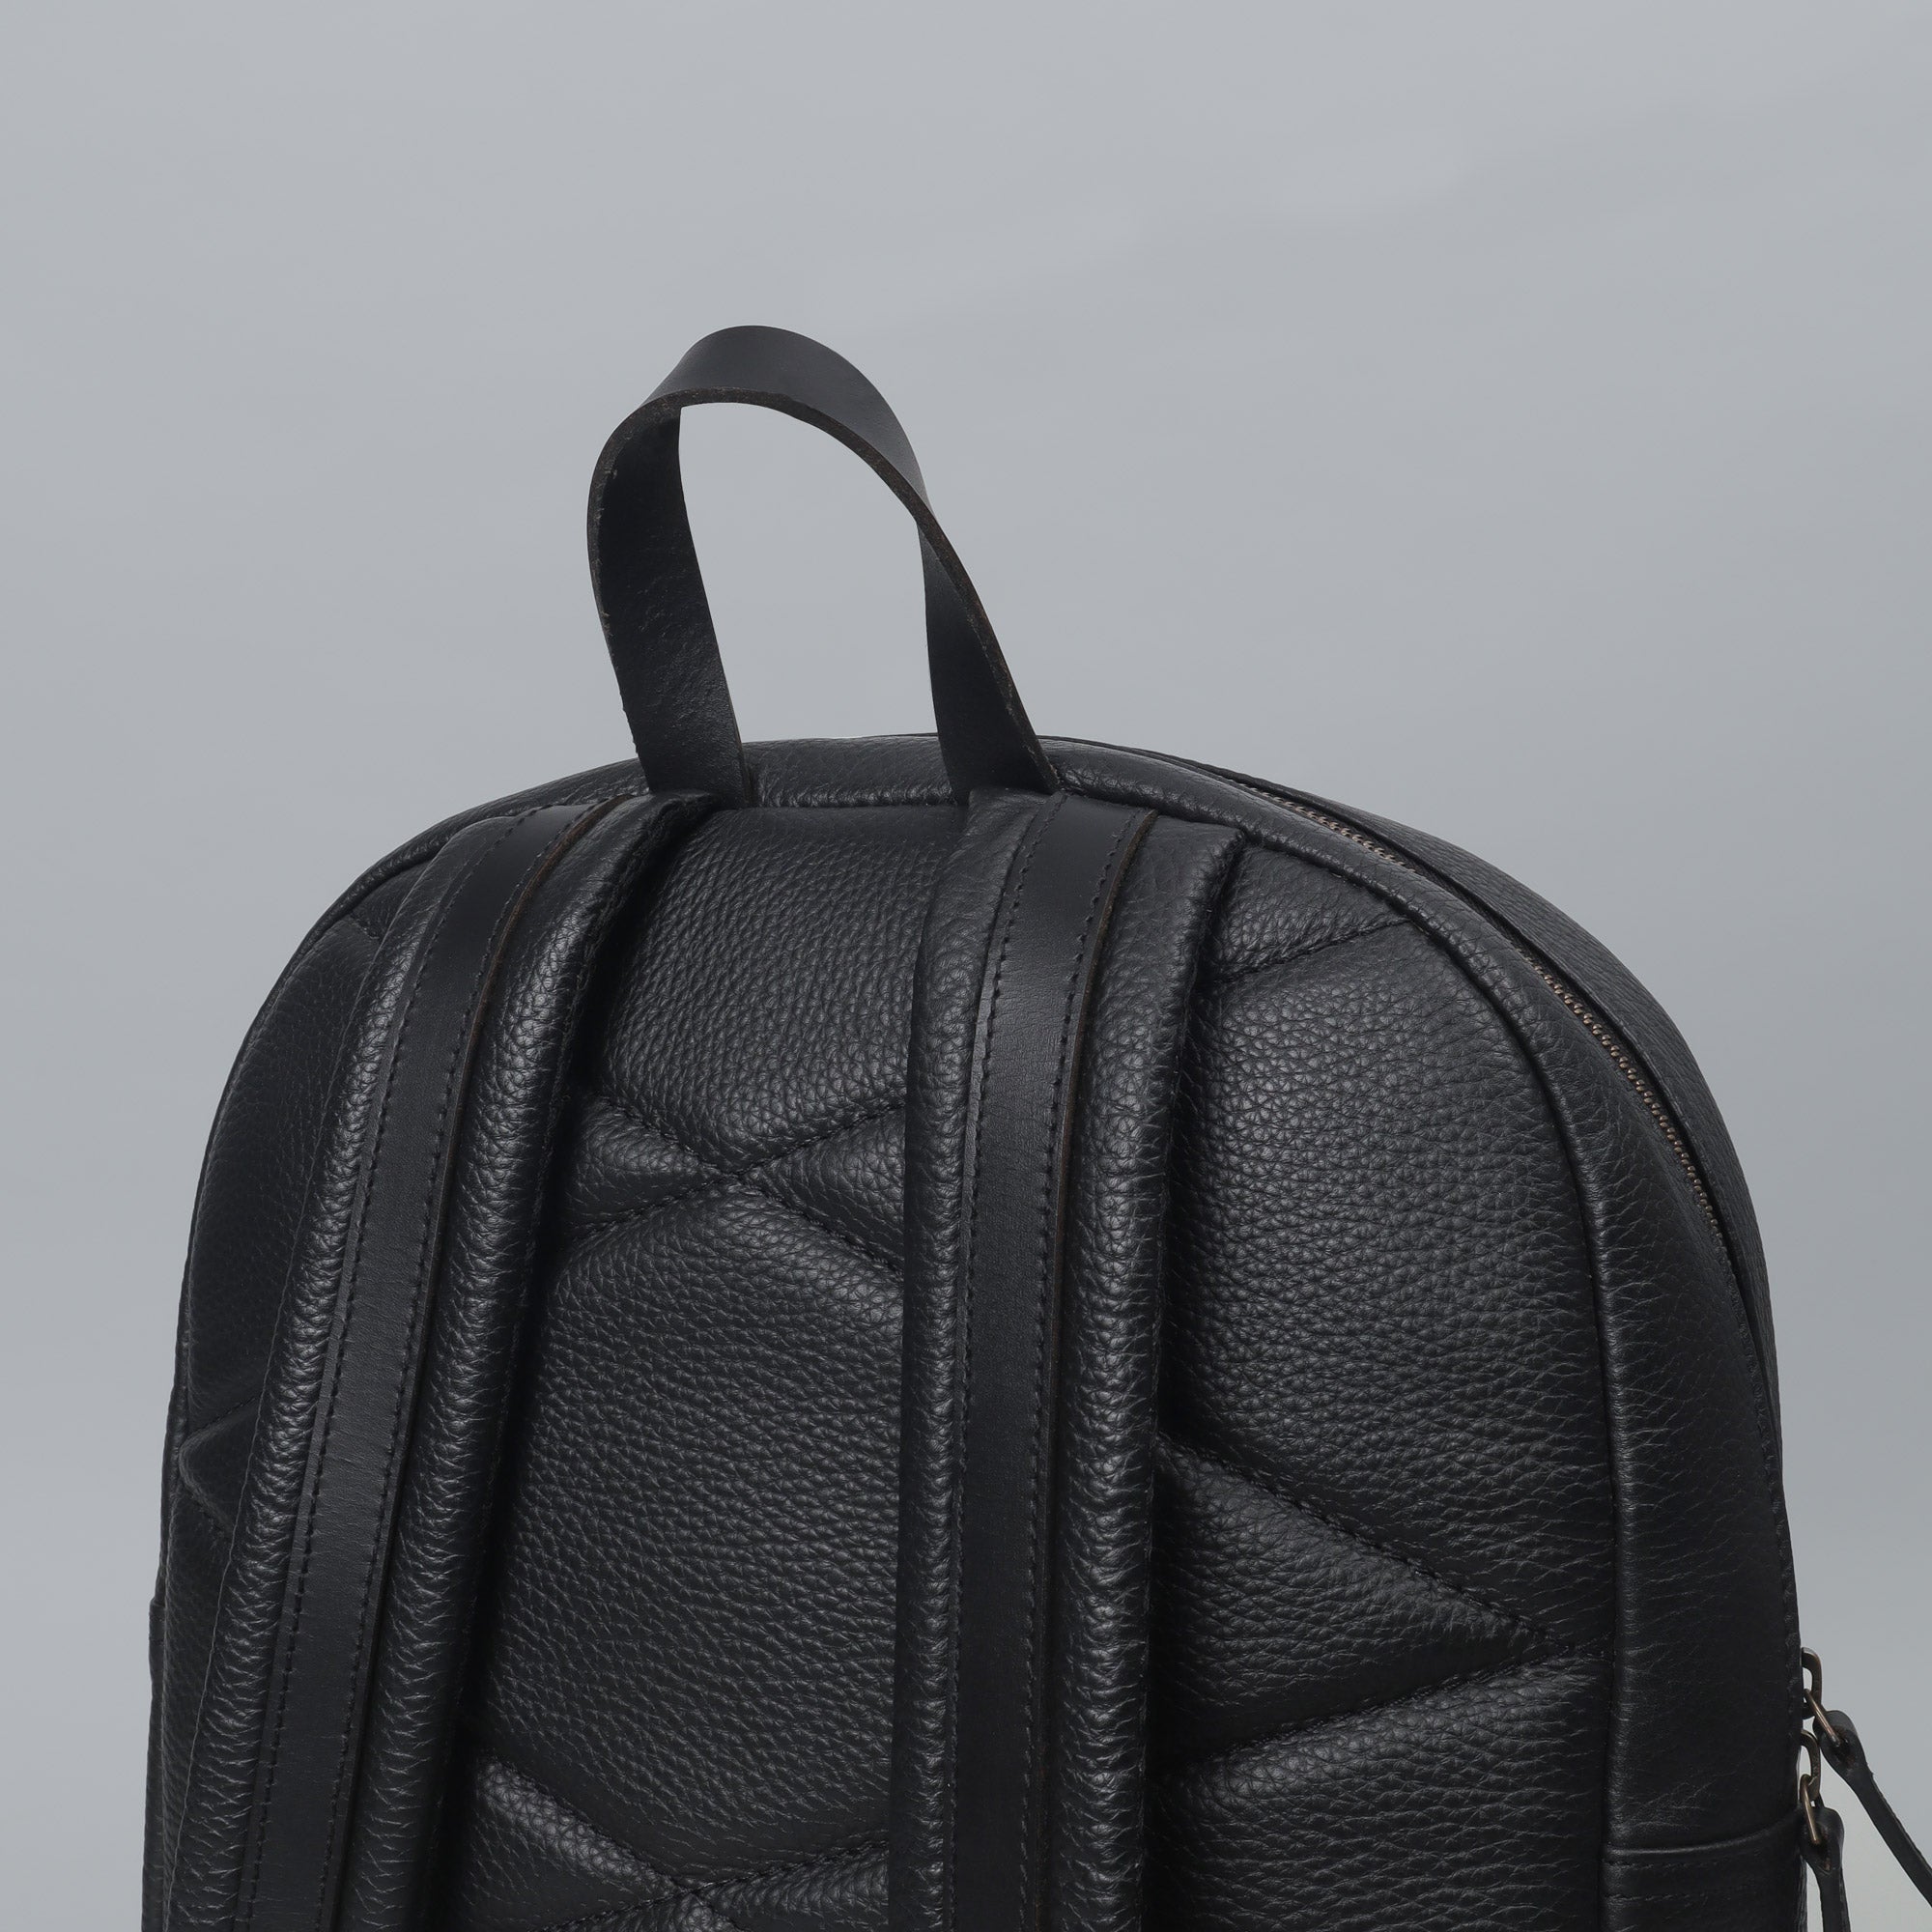 Black leather laptop backpack